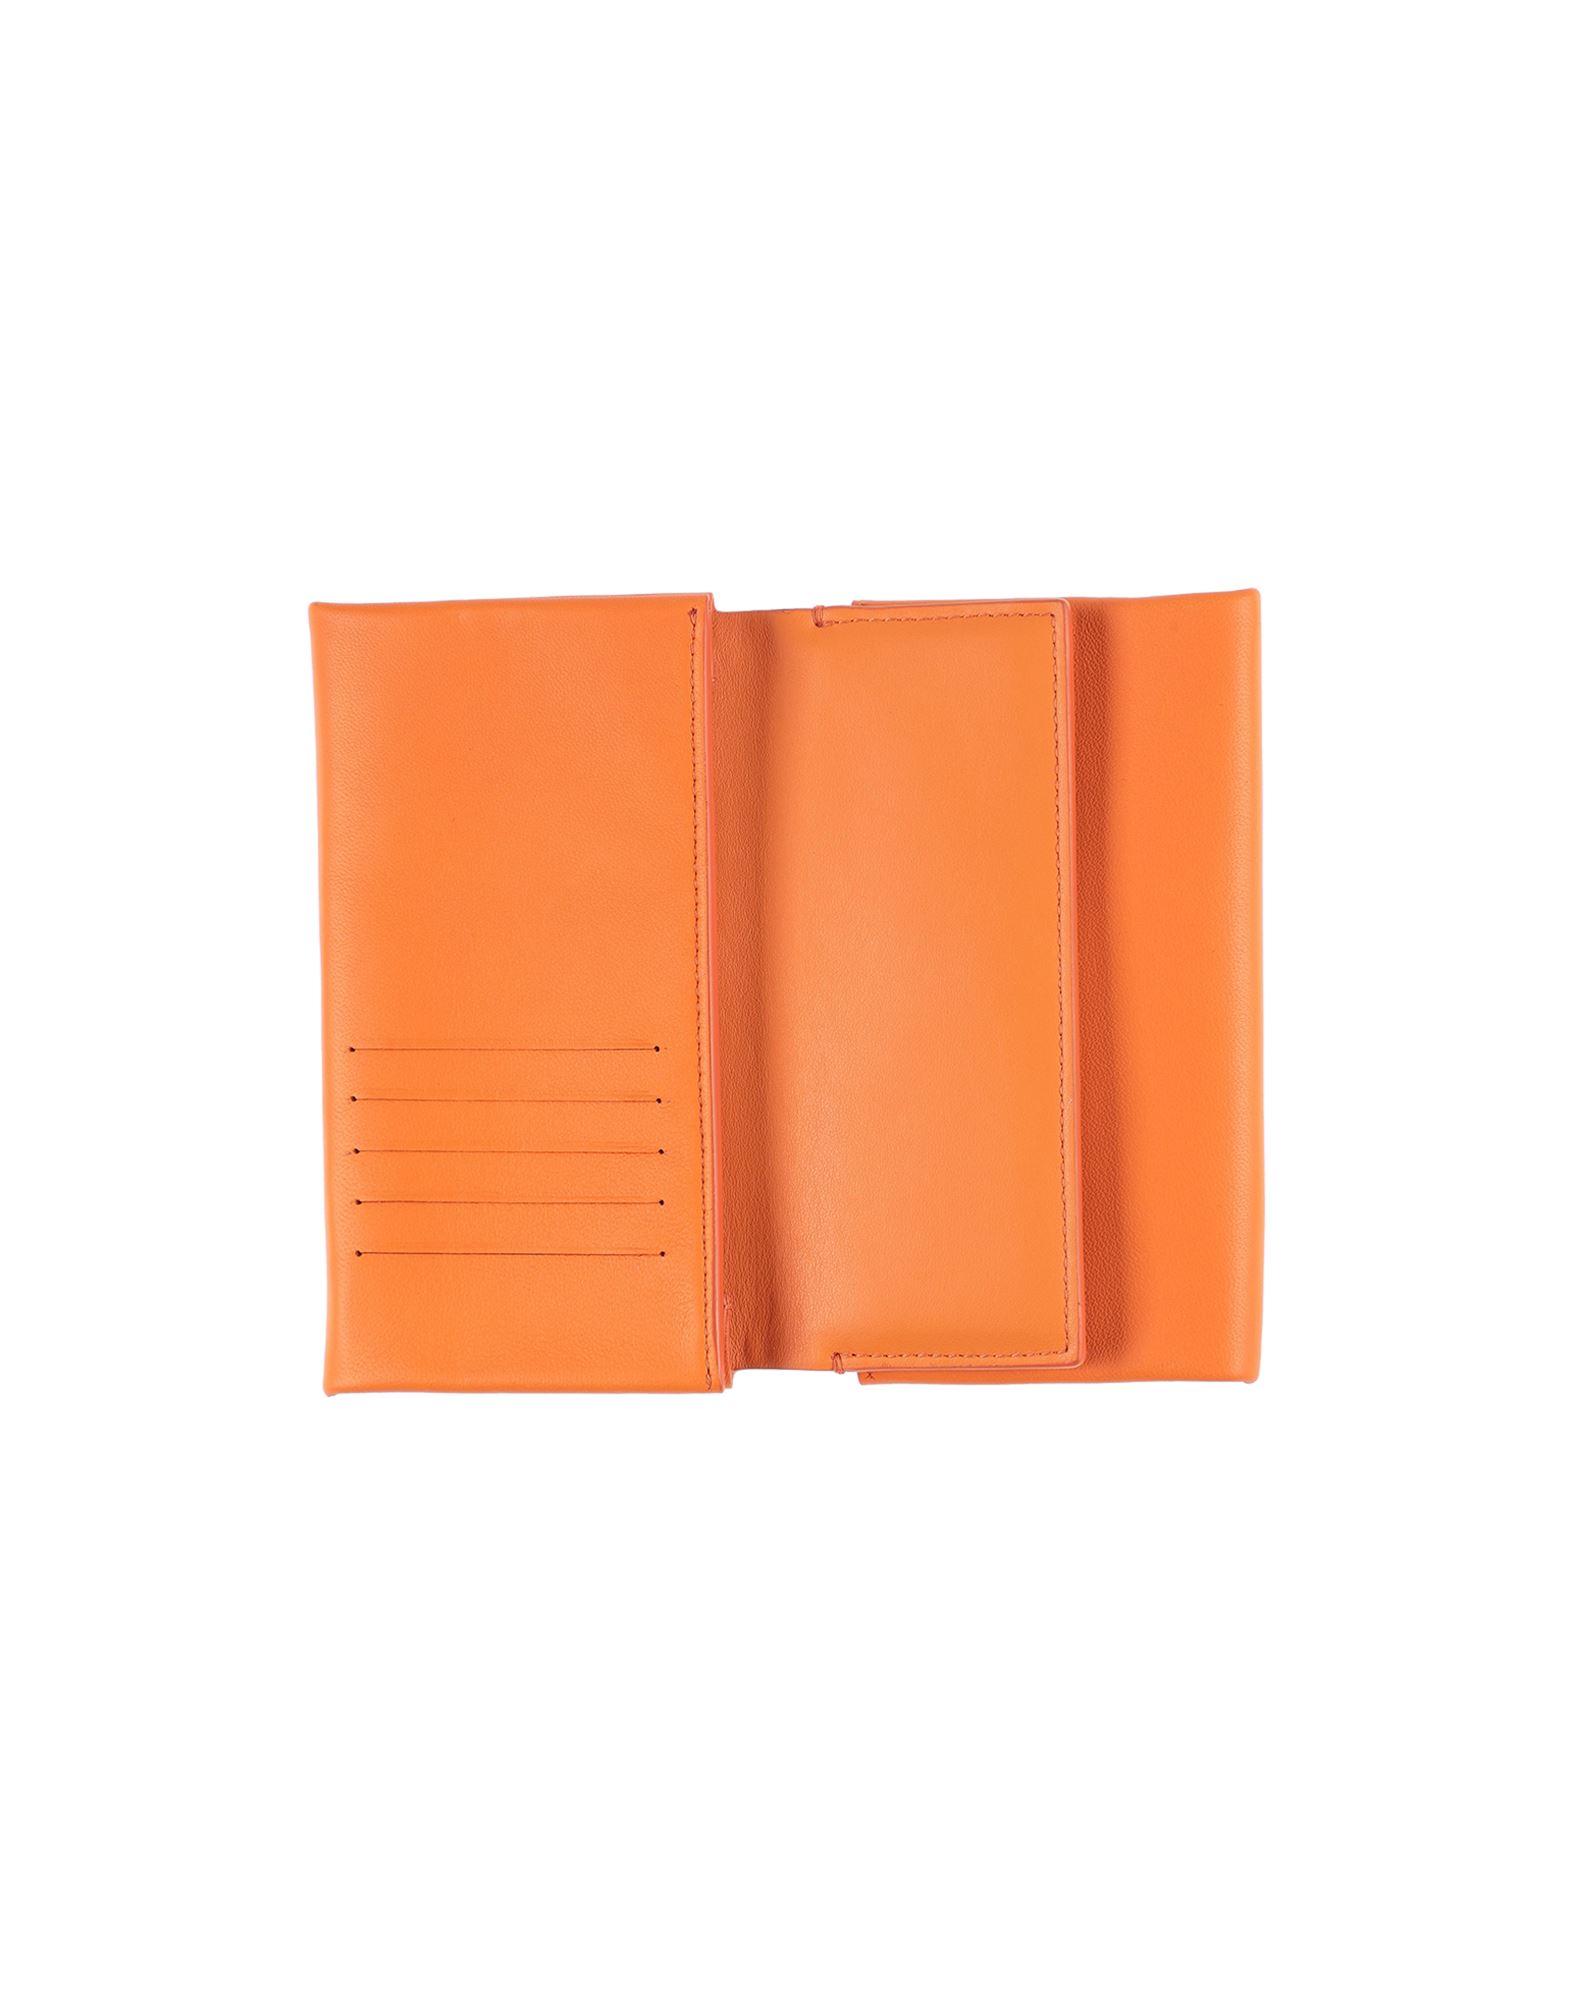 Bottega Veneta Leather Wallet in Orange - Lyst